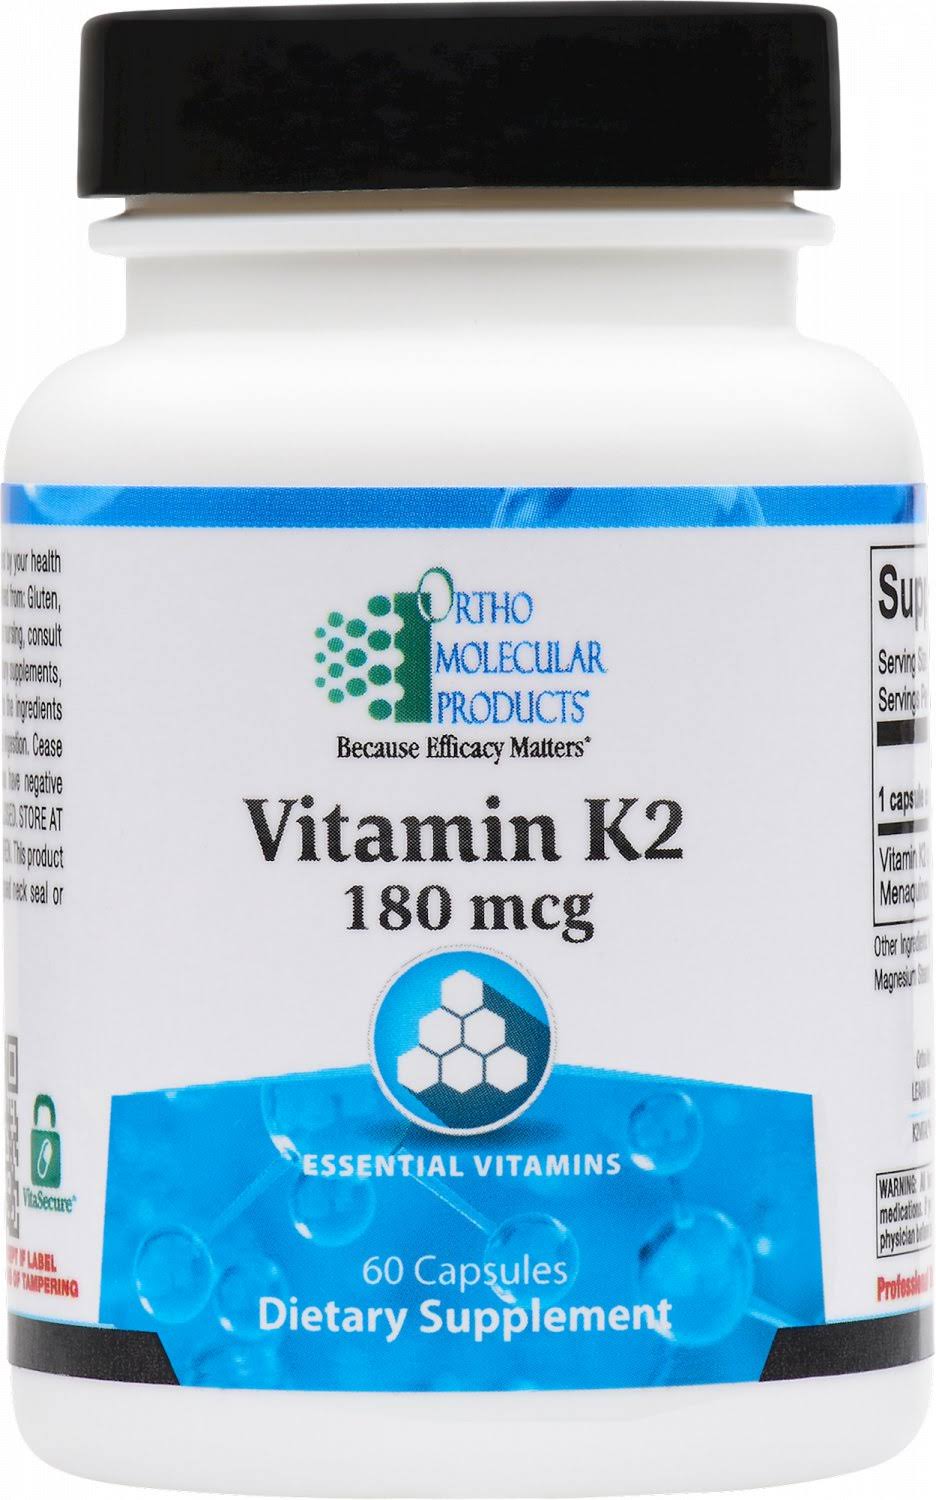 Ortho Molecular Products - Vitamin K2 - 180 mcg - 60 Capsules